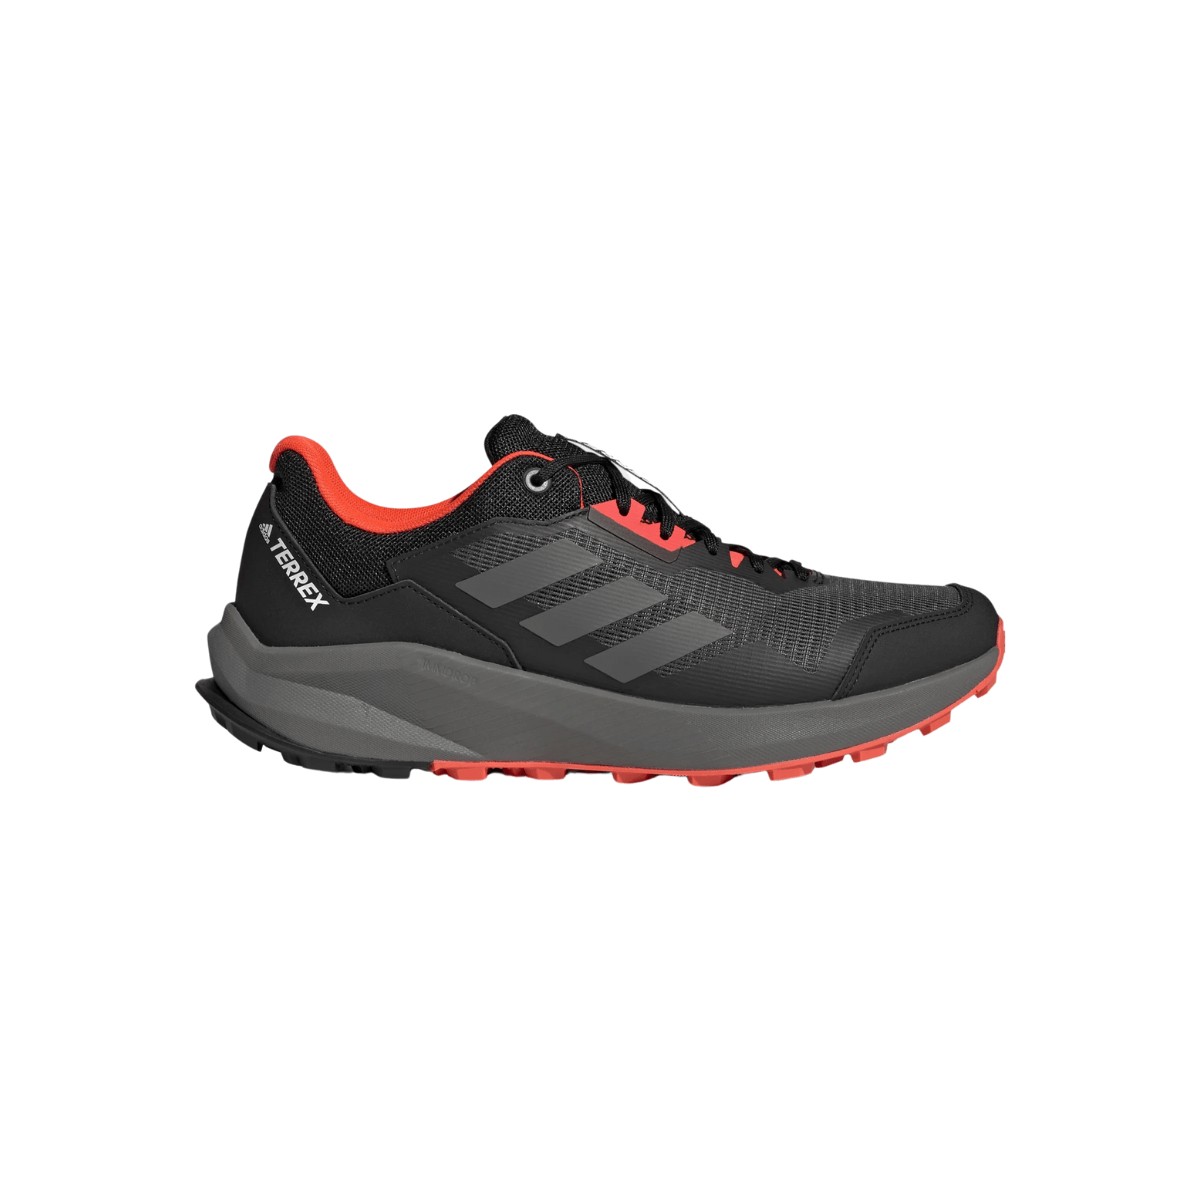 Chaussures Adidas Terrex Trailrider Noir Gris Rouge AW22, Taille UK 7.5